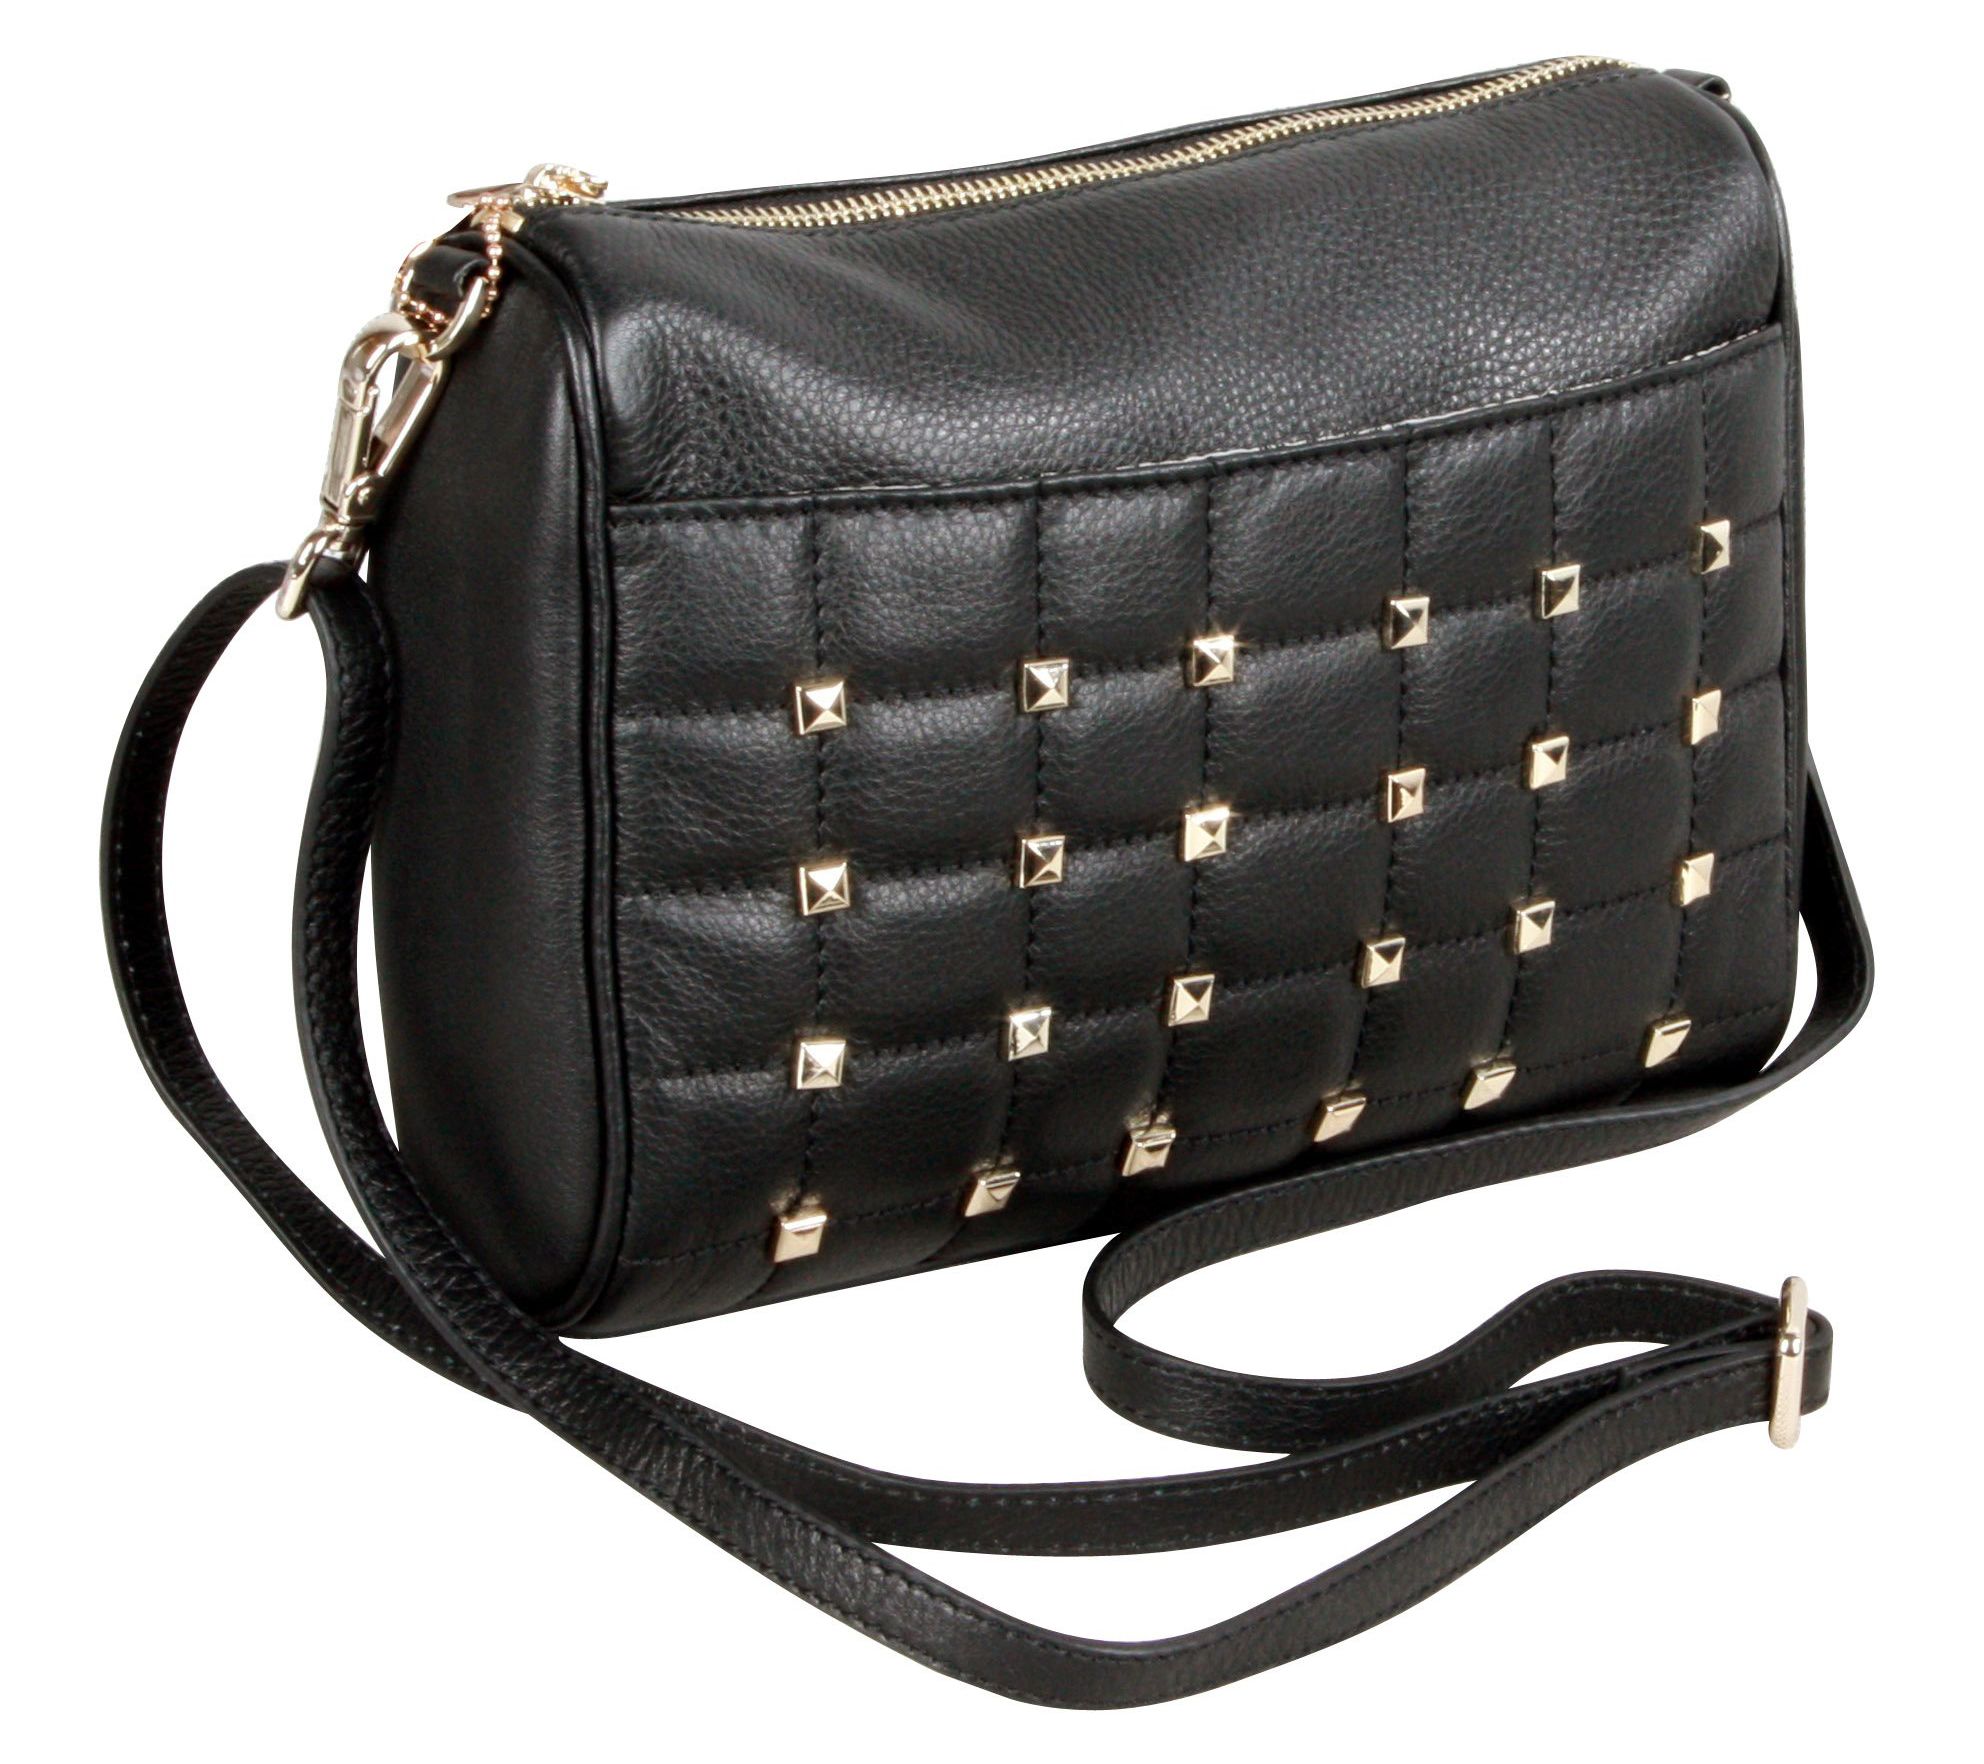 Karla Hanson Irene Studded Leather Crossbody Bag - QVC.com